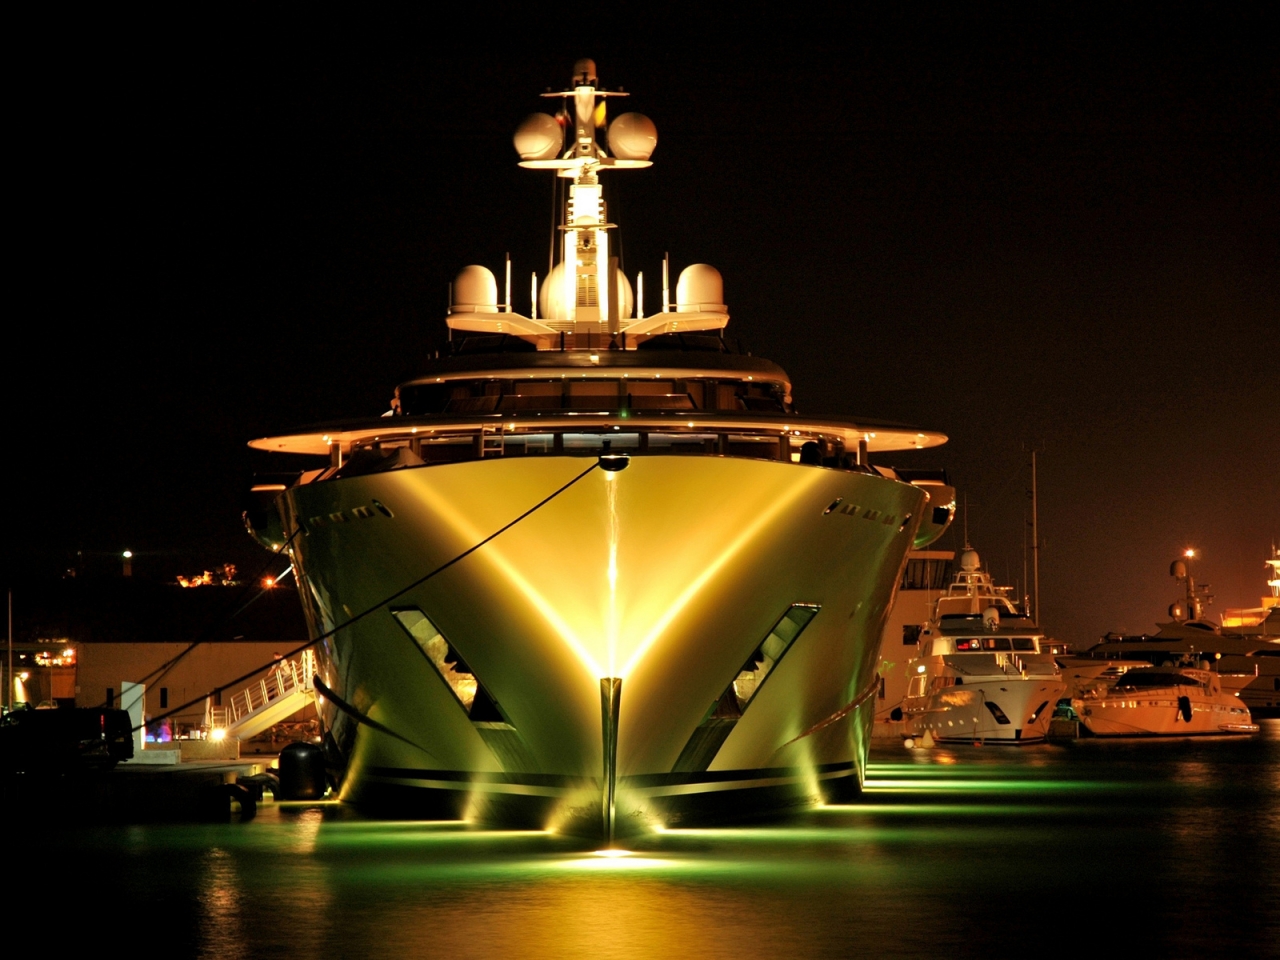 Pelorus Yacht for 1280 x 960 resolution